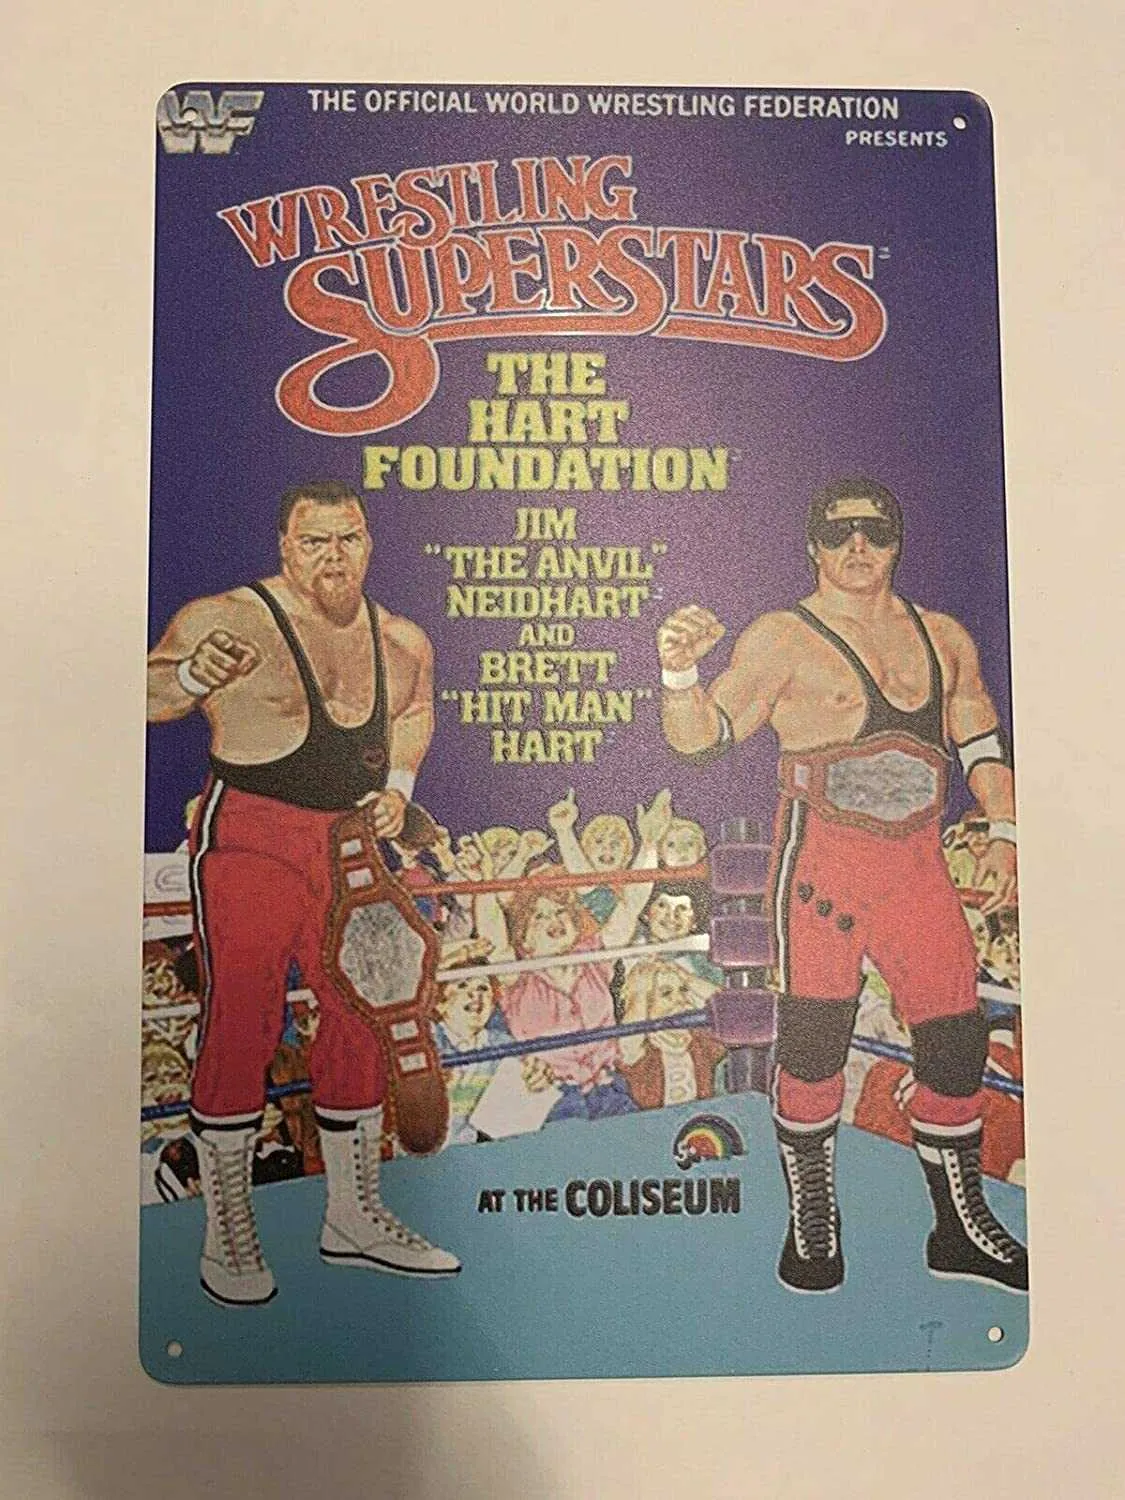 2021 Segni di metallo Bret Hart Foundation WWF LJN Poster Tin Tin Sign Elite Mattel Figura LOTTO 20 × 30 cm Poster Sign Nostalgic Tin Sign